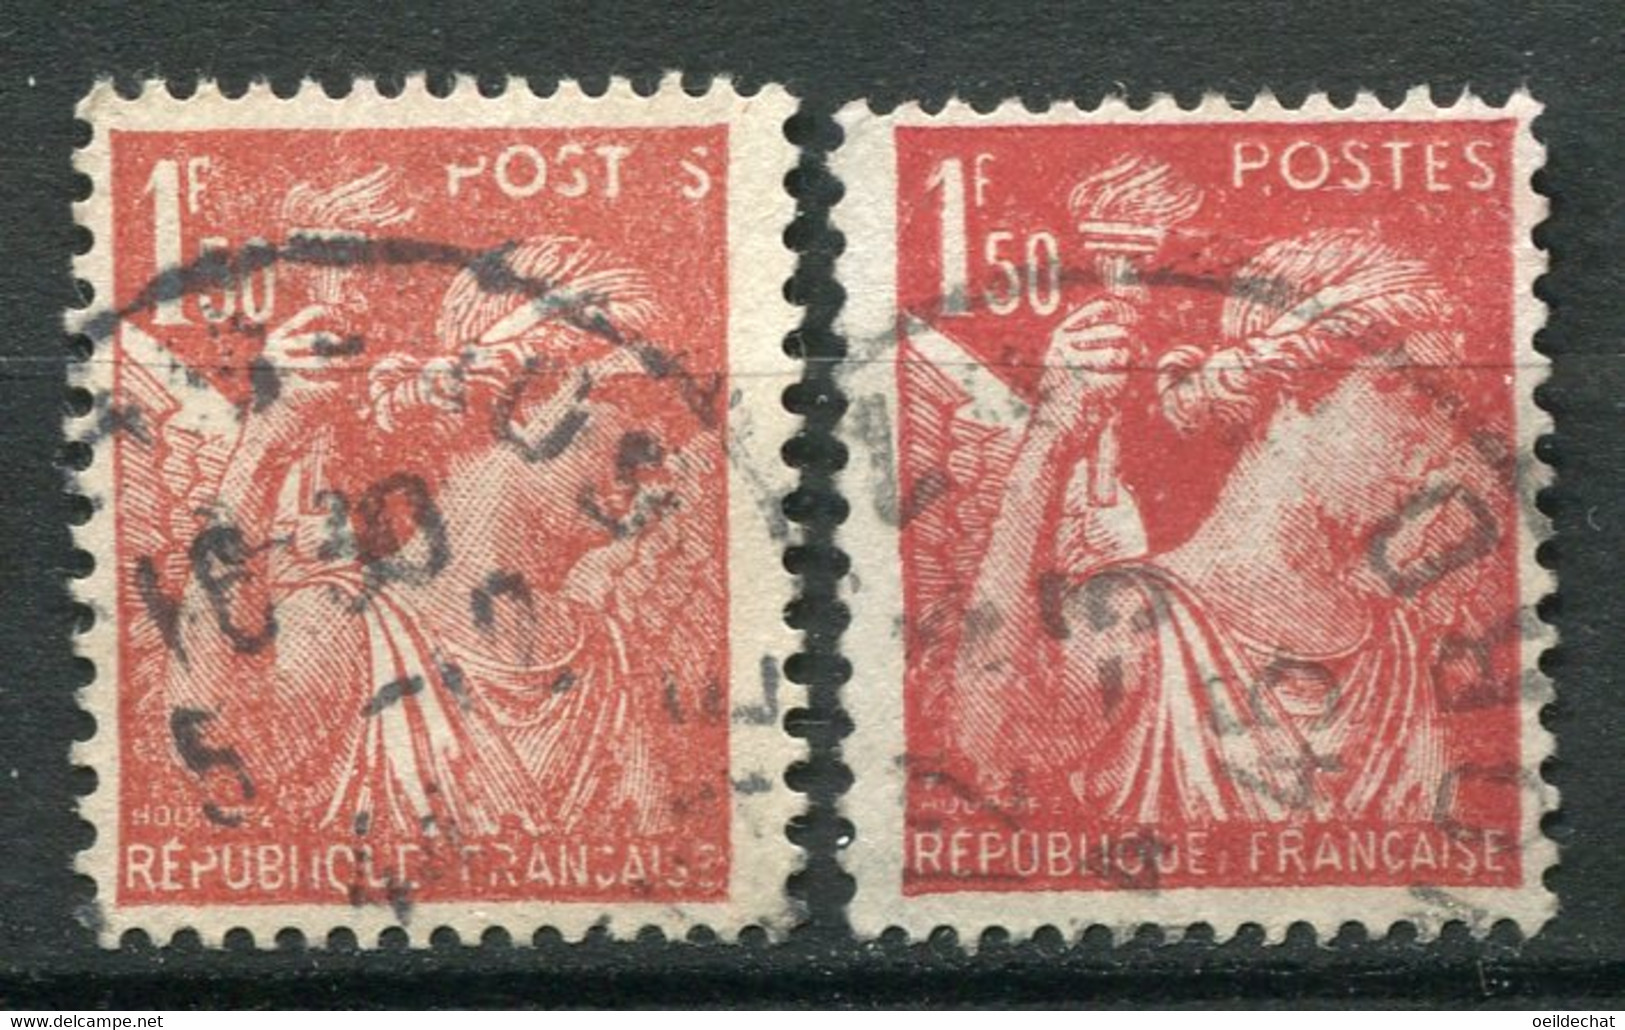 21067 FRANCE N°652l°(Maury) 1F50 Type Iris : Lettres Absentes Et Nuance Brun Clair Au Lieu De Brun-rouge+normal 1944  TB - Used Stamps